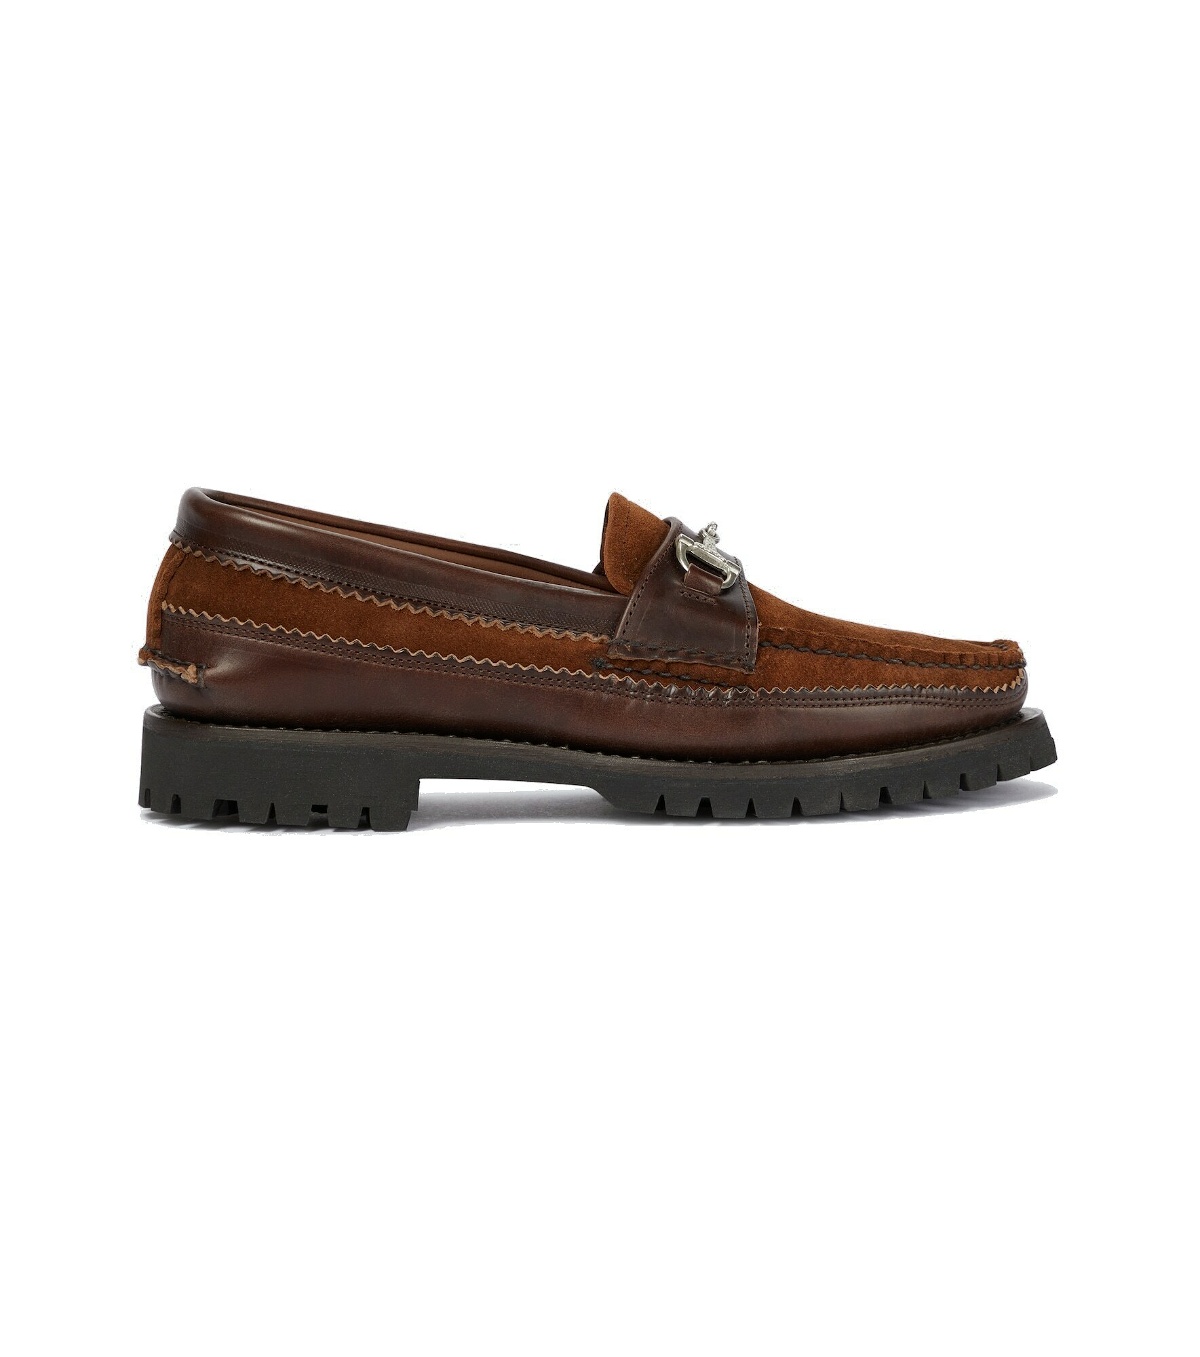 Yuketen - Bit leather and suede loafers Yuketen